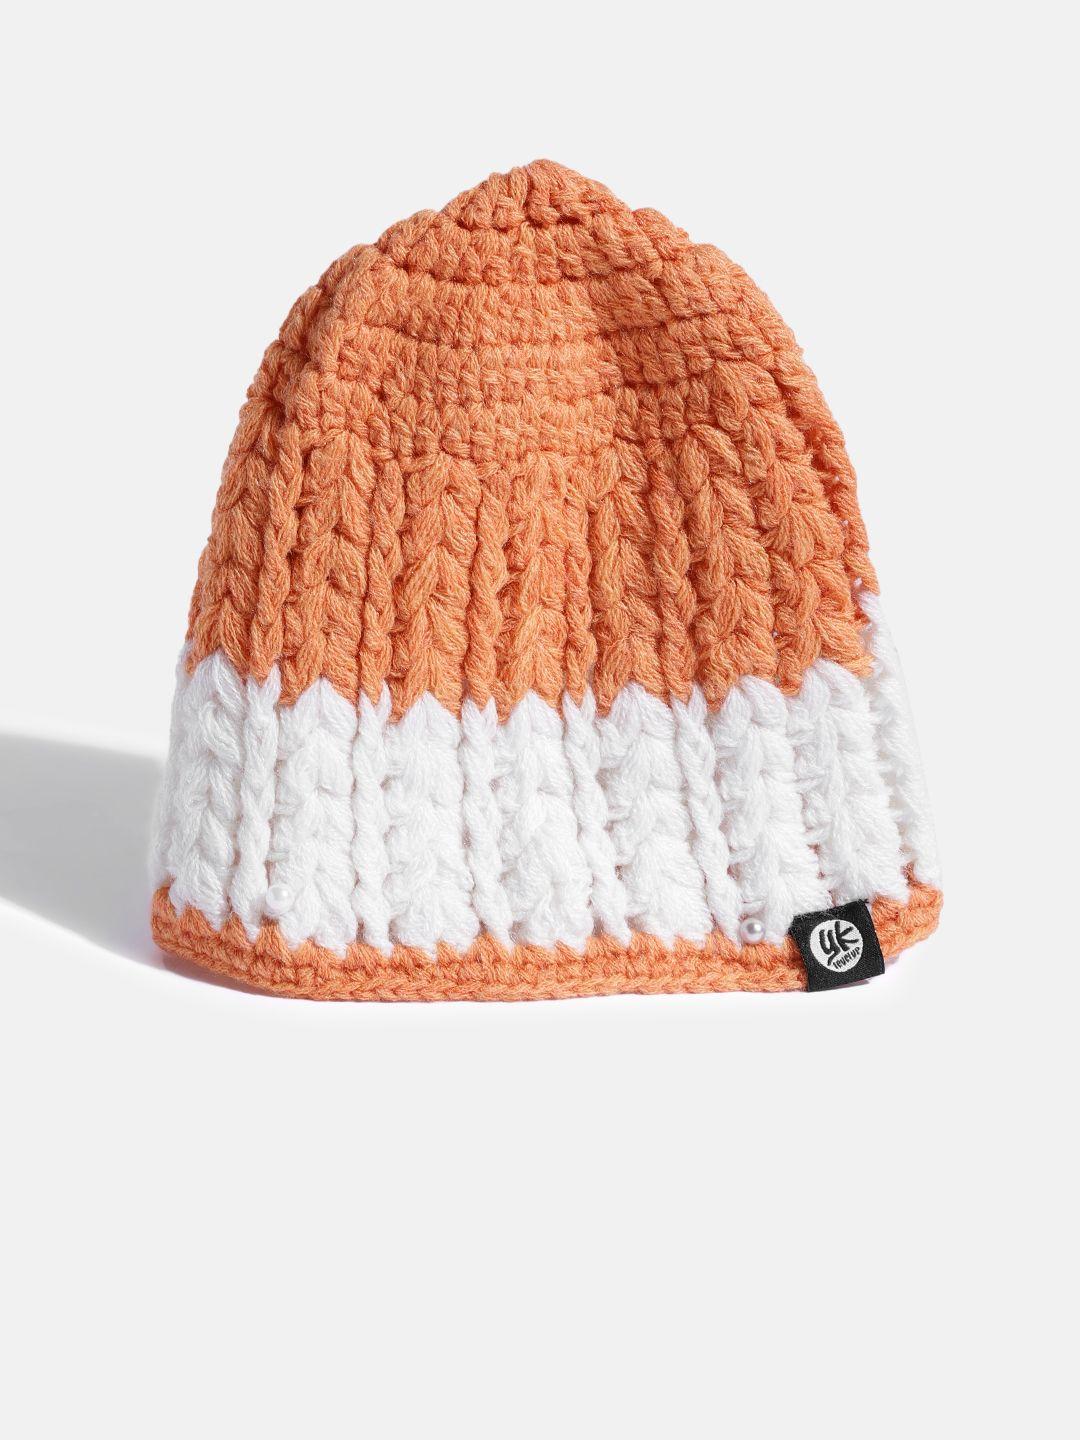 yk kids orange & white colourblocked open knit beanie